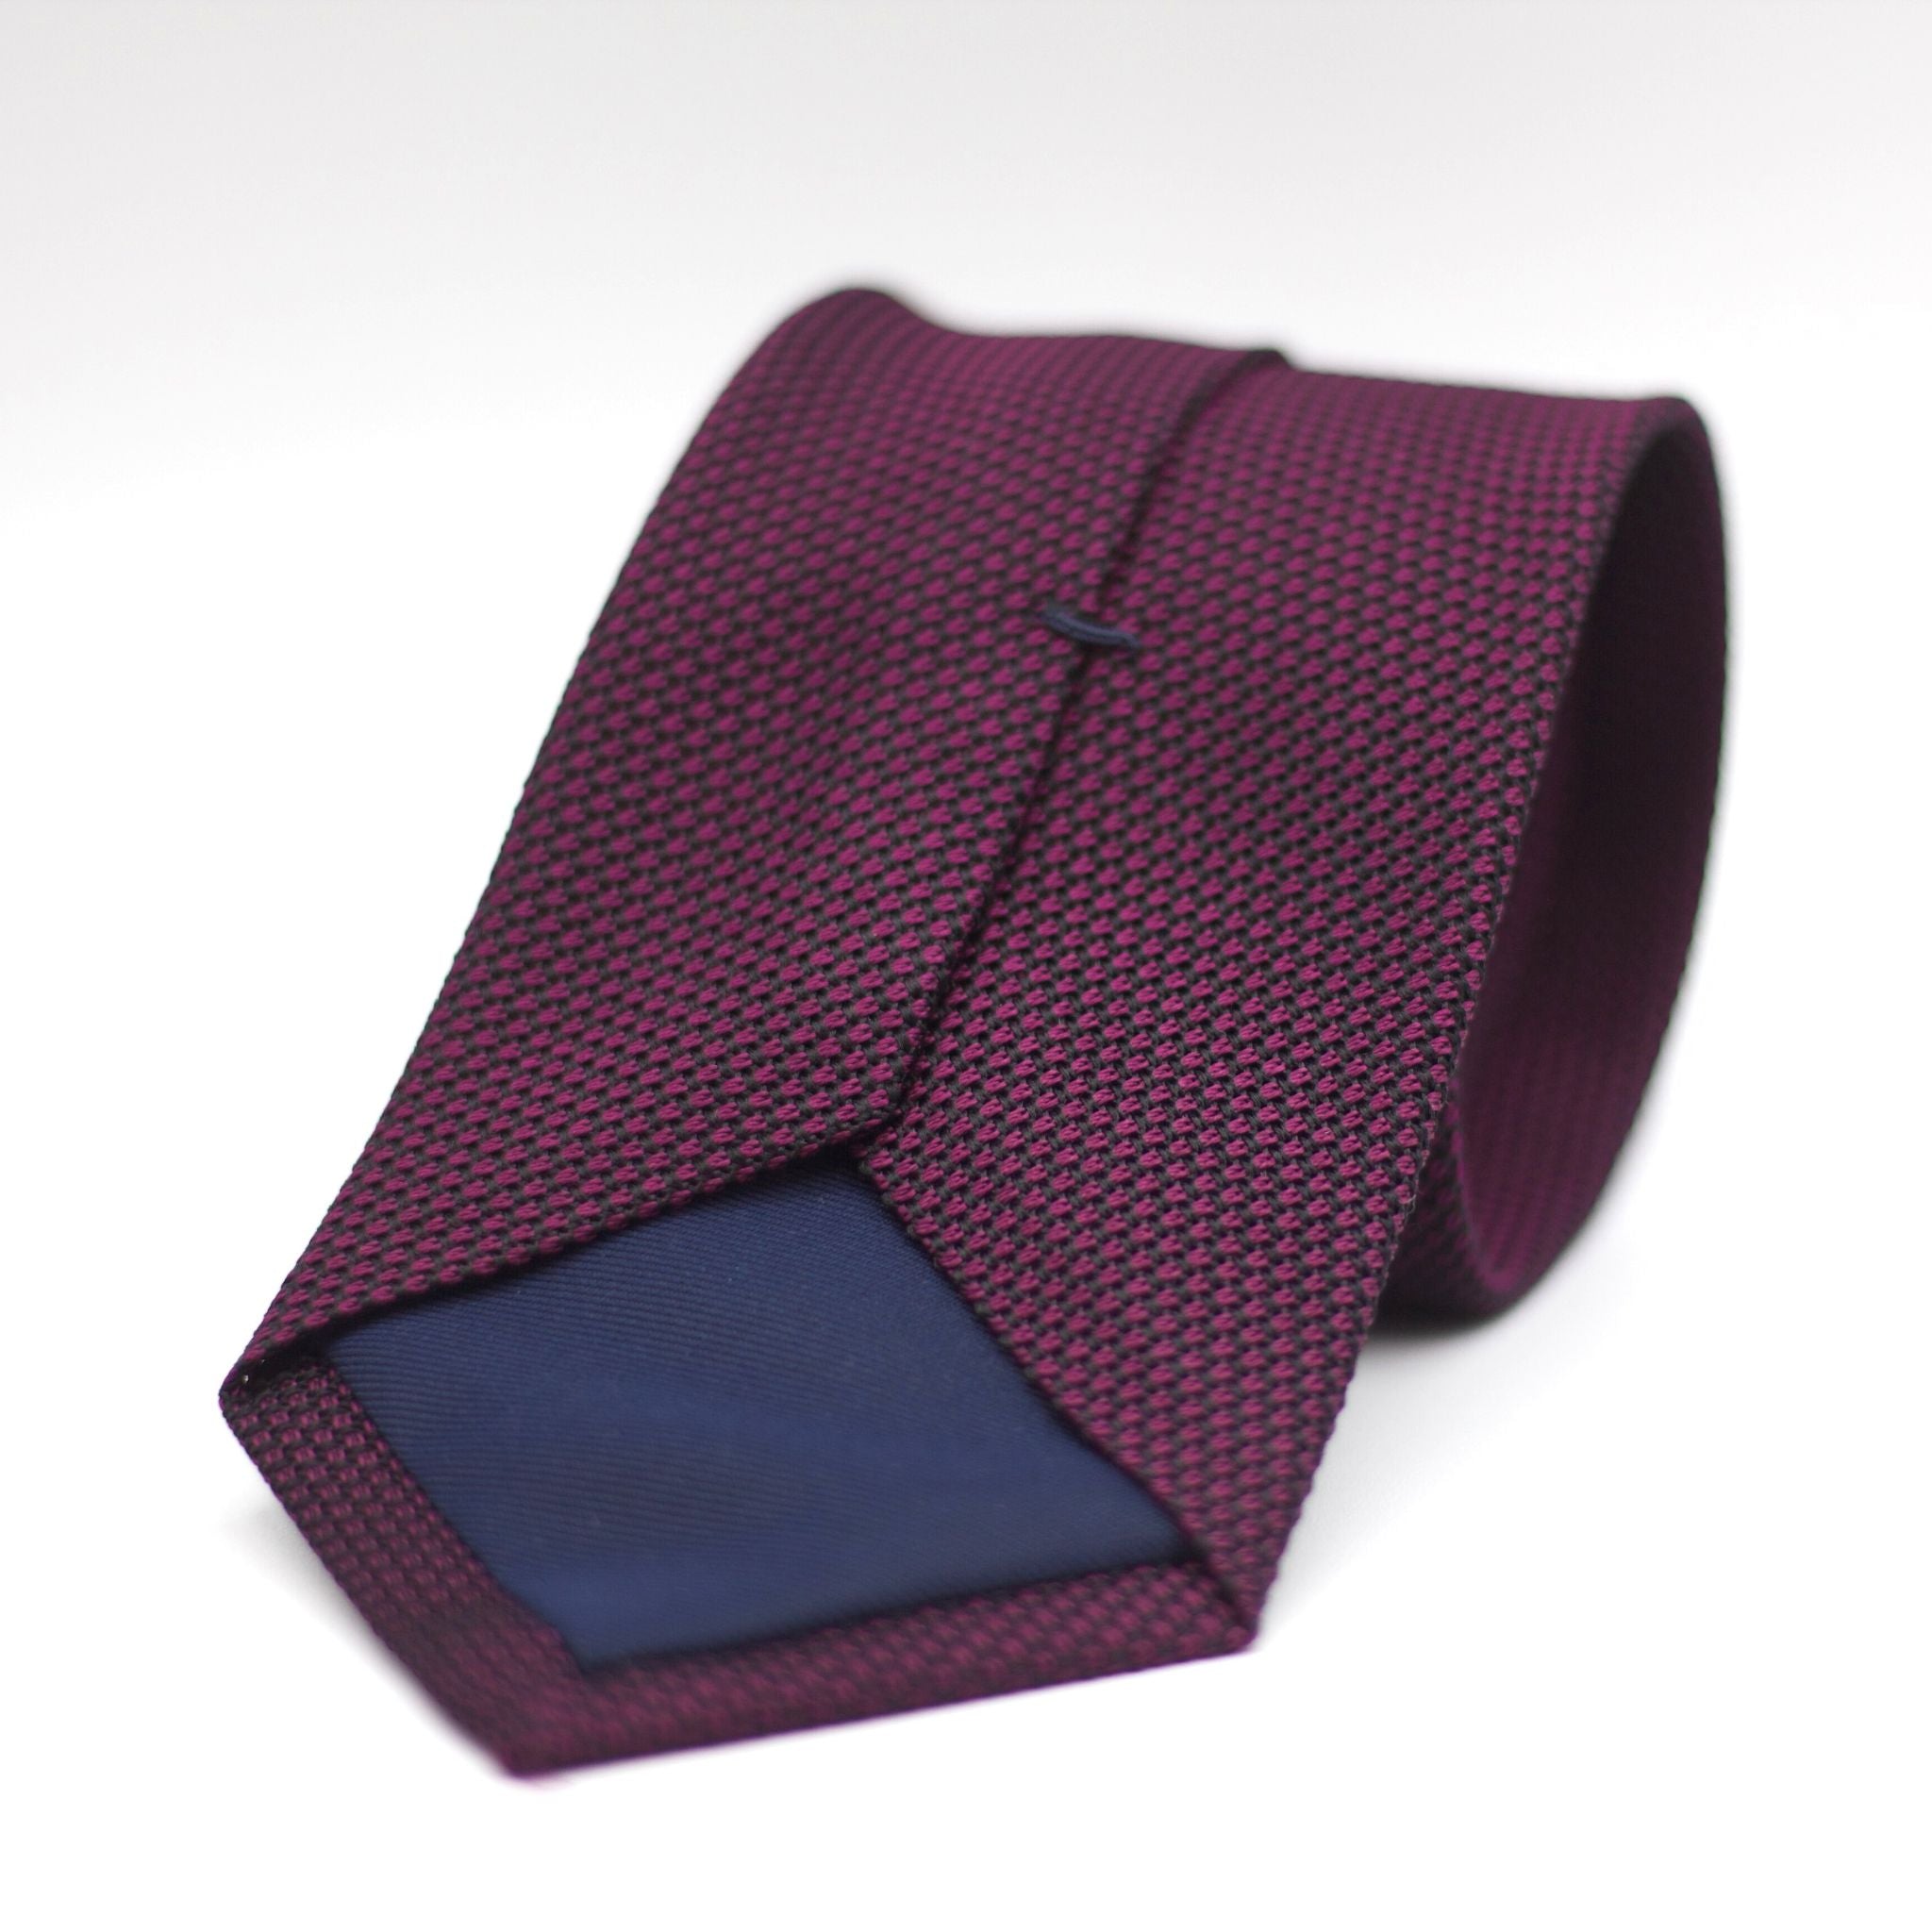 Cruciani & Bella 100% Silk Grenadine garza fina  Tipped Hand rolled blades Purple and black  tie Handmade in Italy 8 cm x 150 cm